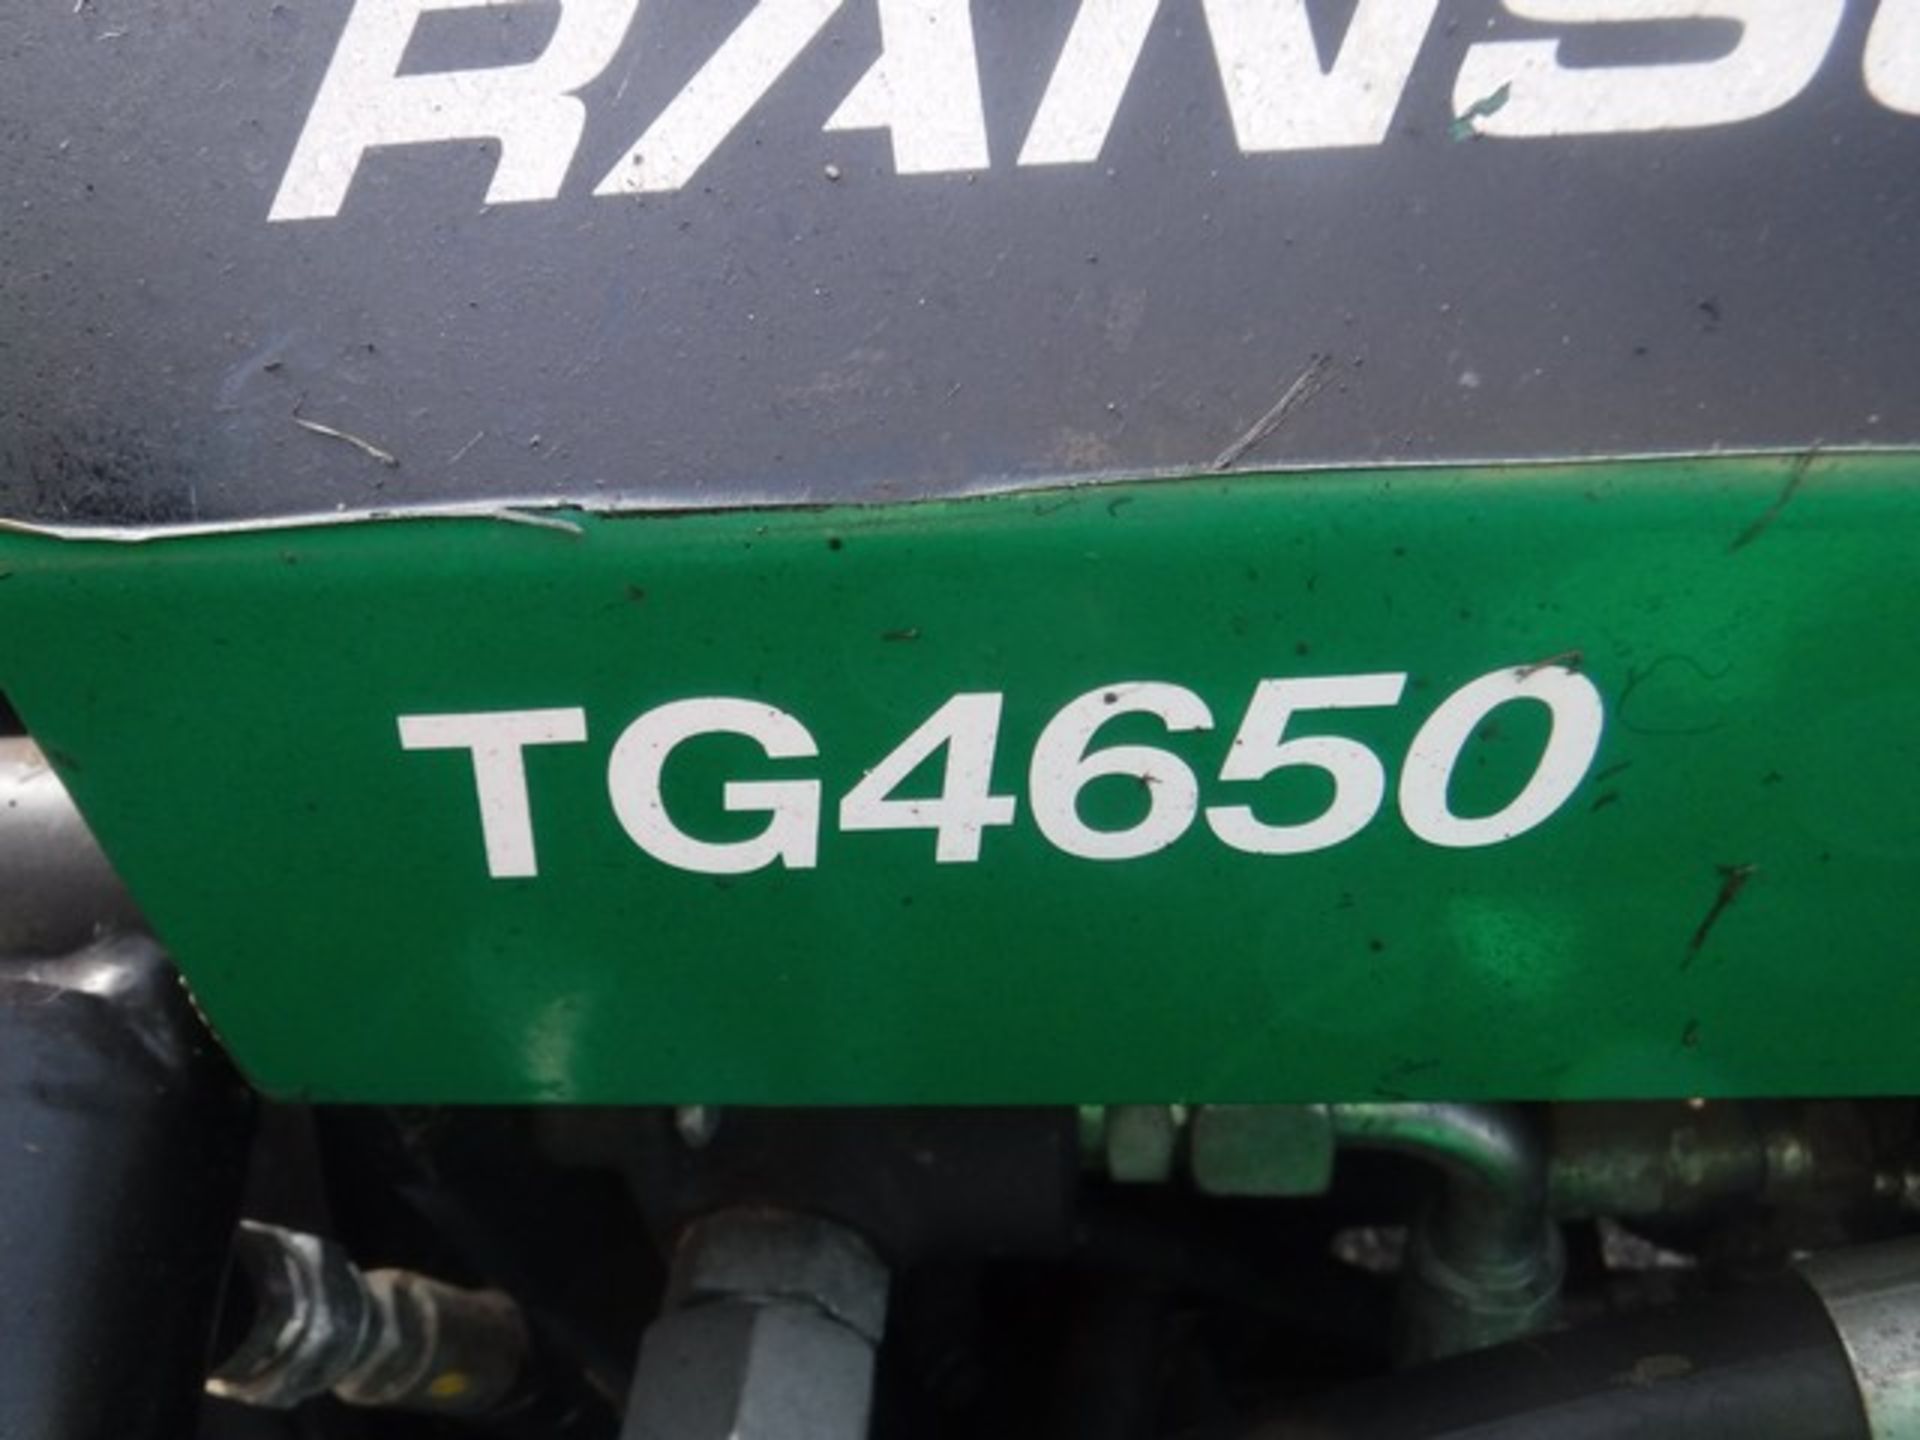 2013 RANSOMES TG4650 cylinder gang mower S/N UA200437. FL NO F0058 - Image 4 of 6